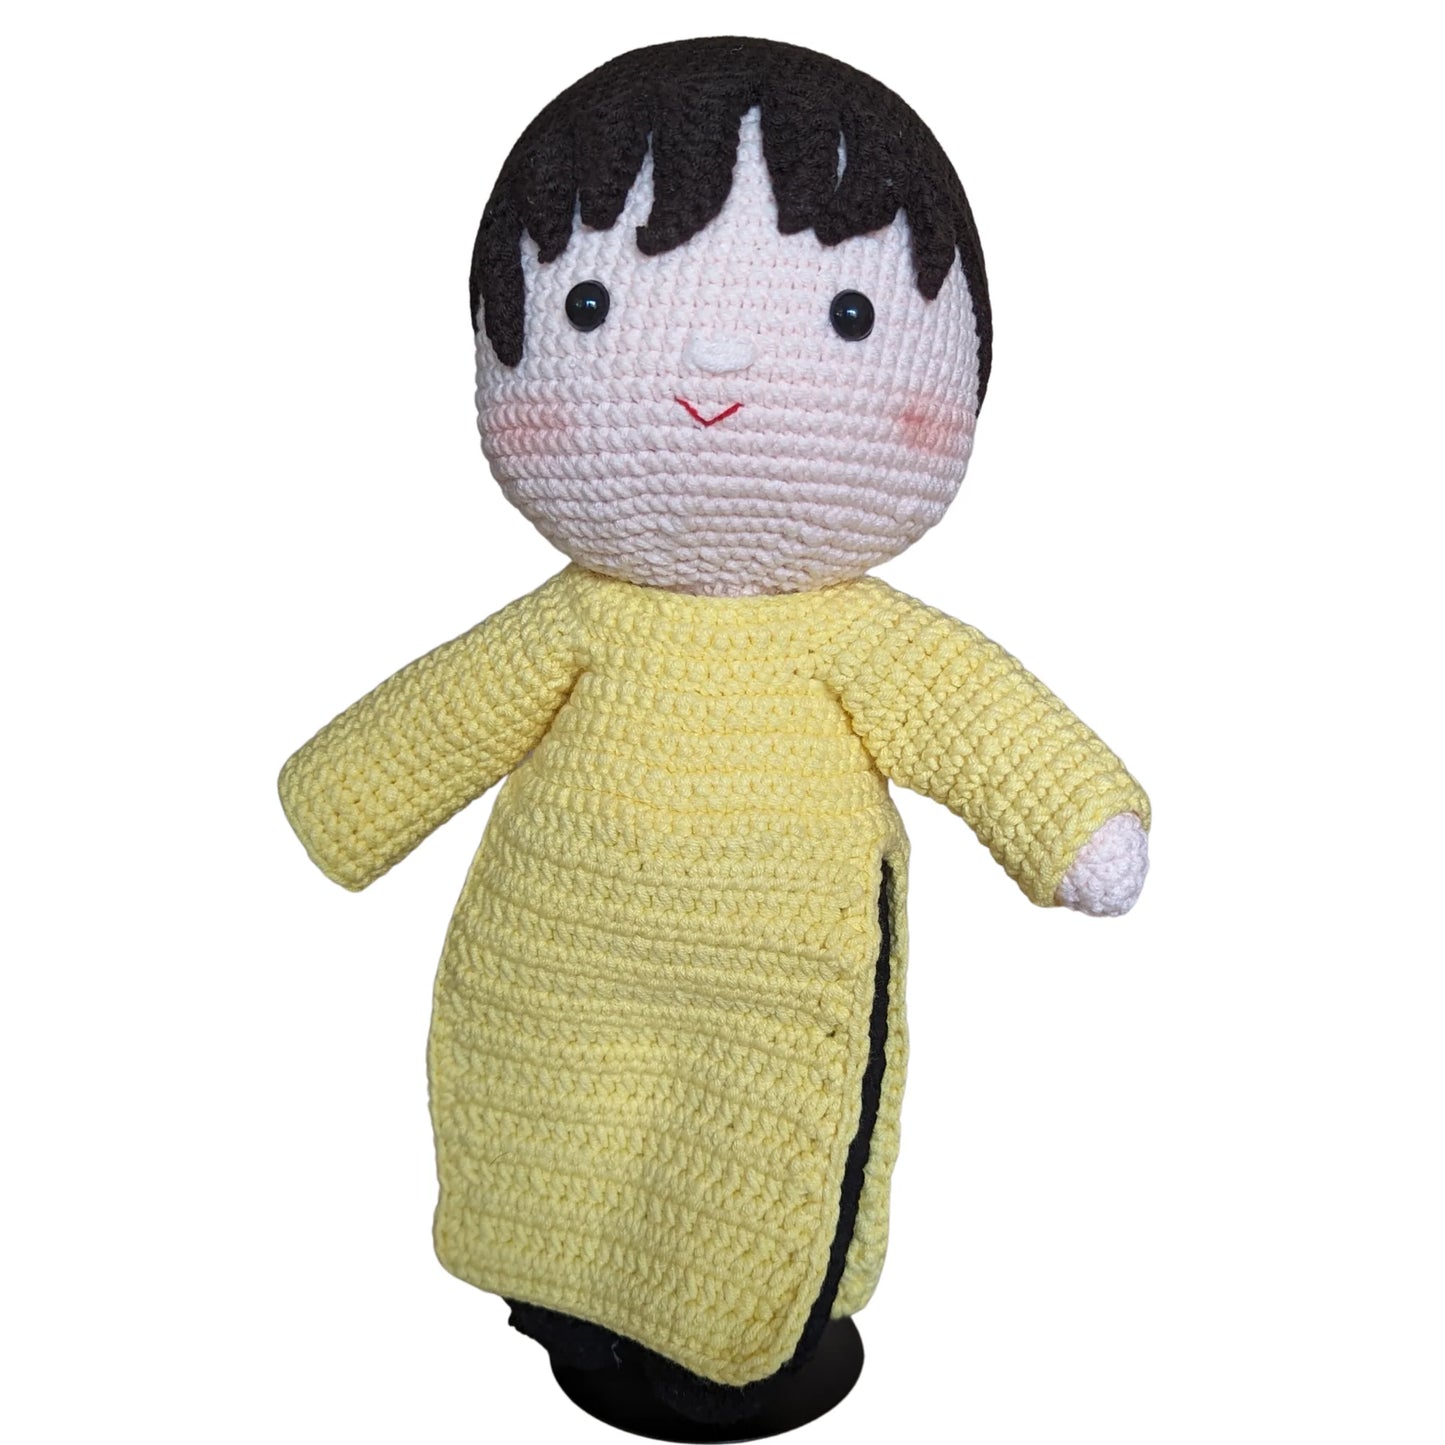 Amigurumi Handmade Vietnamese Boy Doll